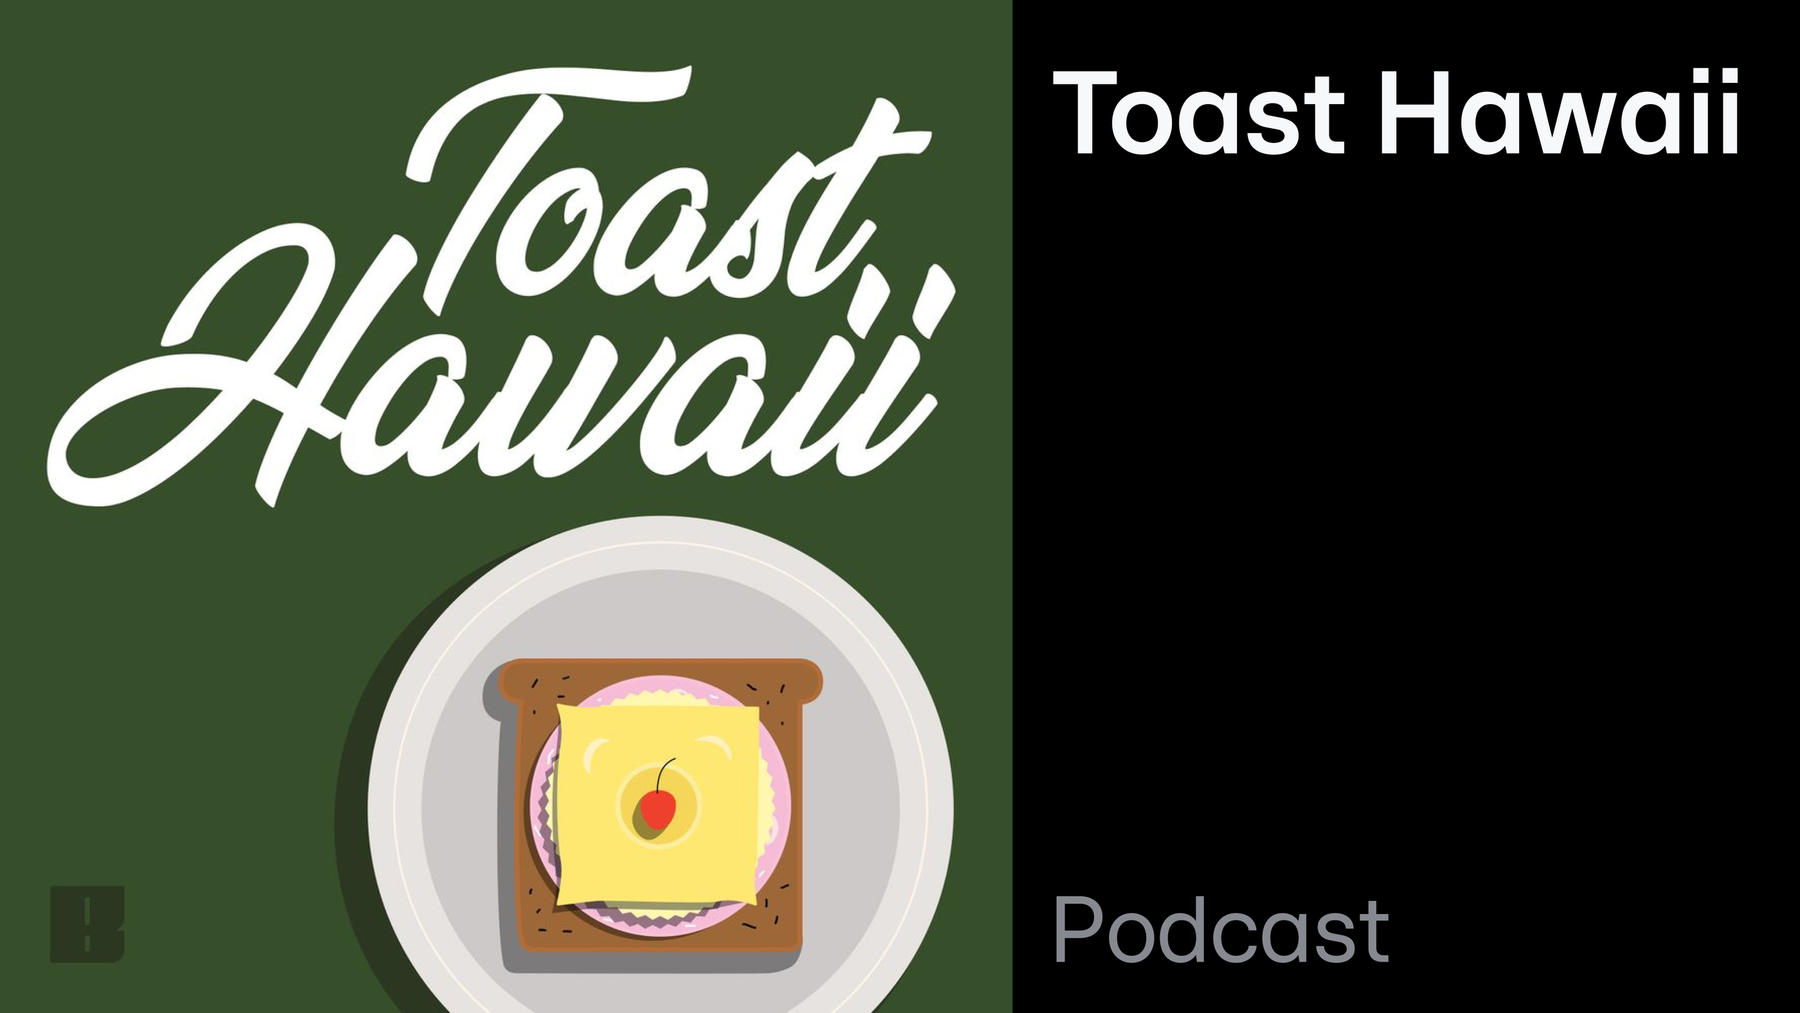 Podcast: Toast Hawaii